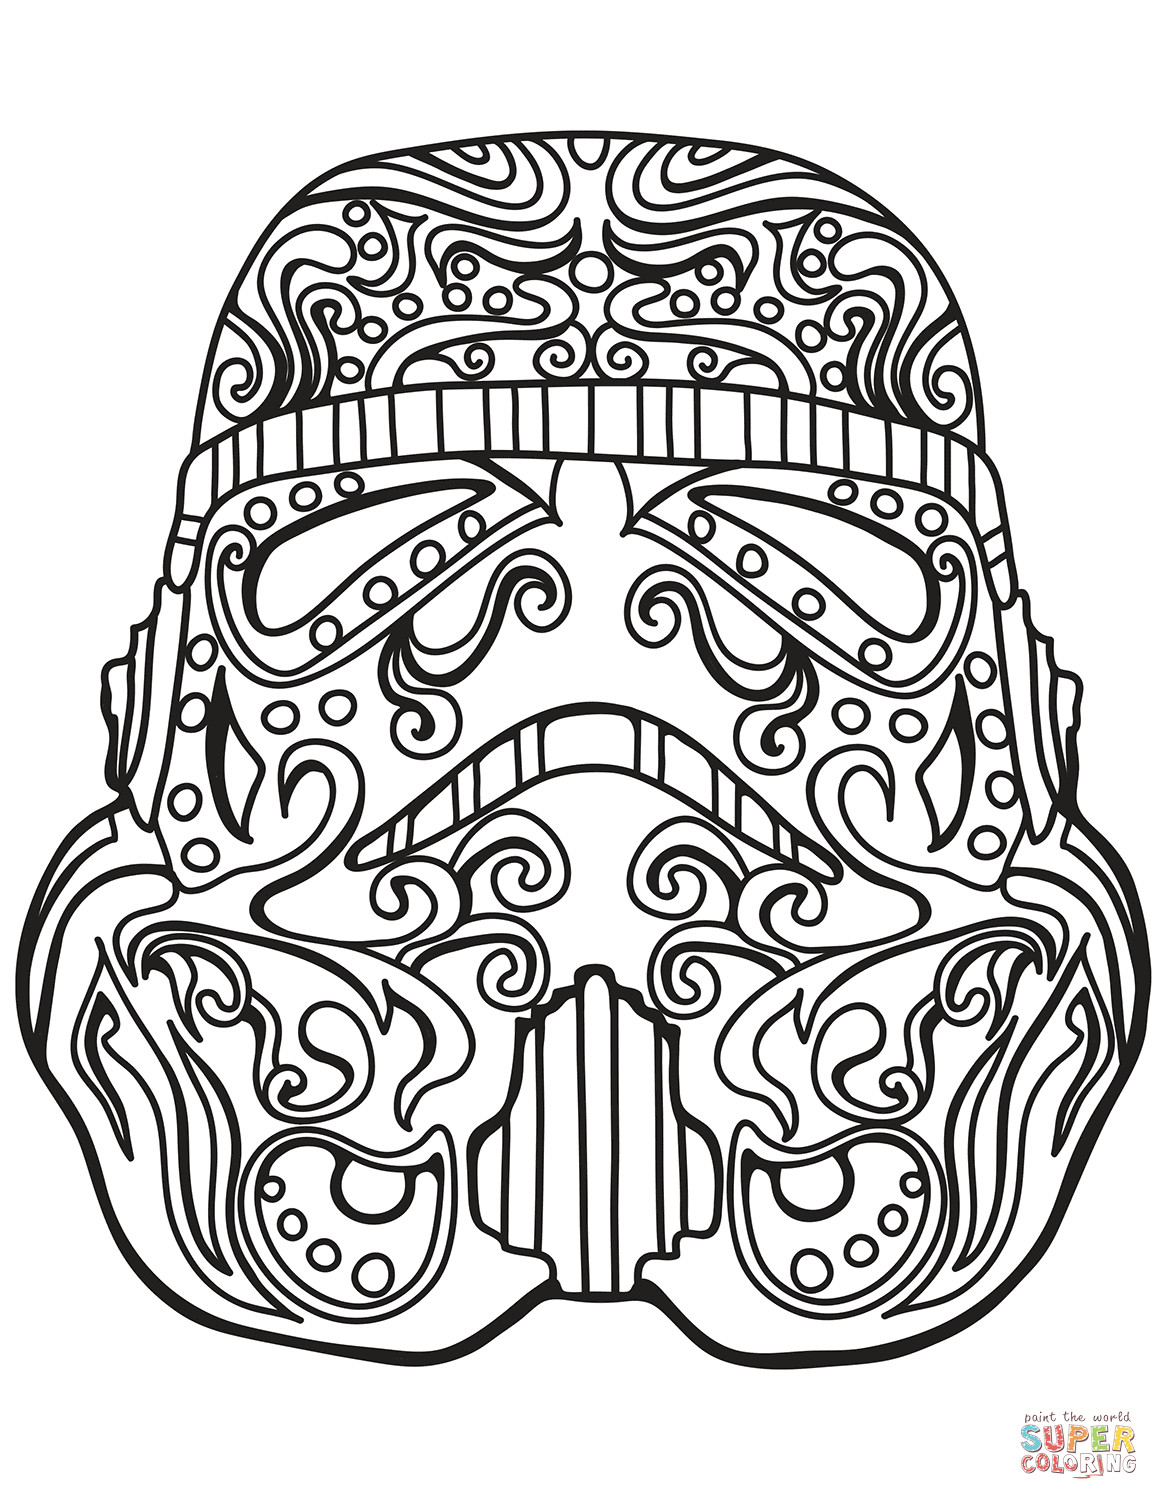 Star Wars Adult Coloring Book
 Star Wars Stormtrooper Sugar Skull coloring page